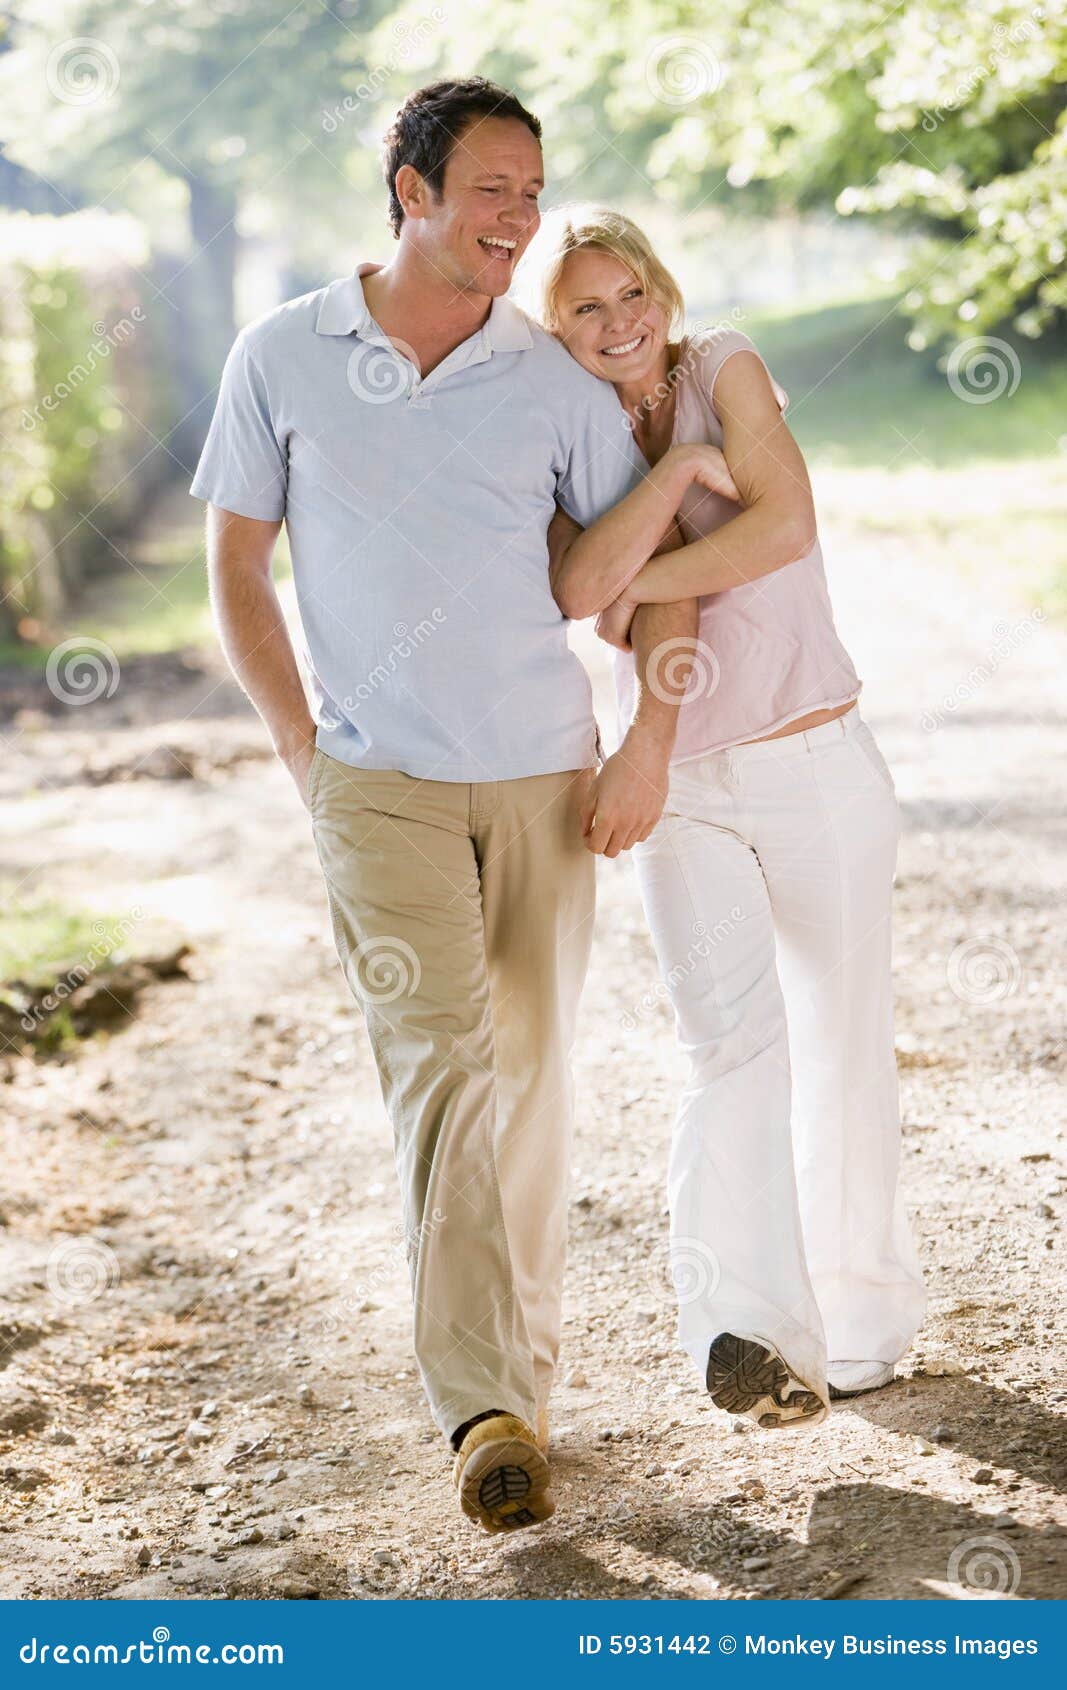 couple-walking-outdoors-arm-arm-smiling-5931442.jpg